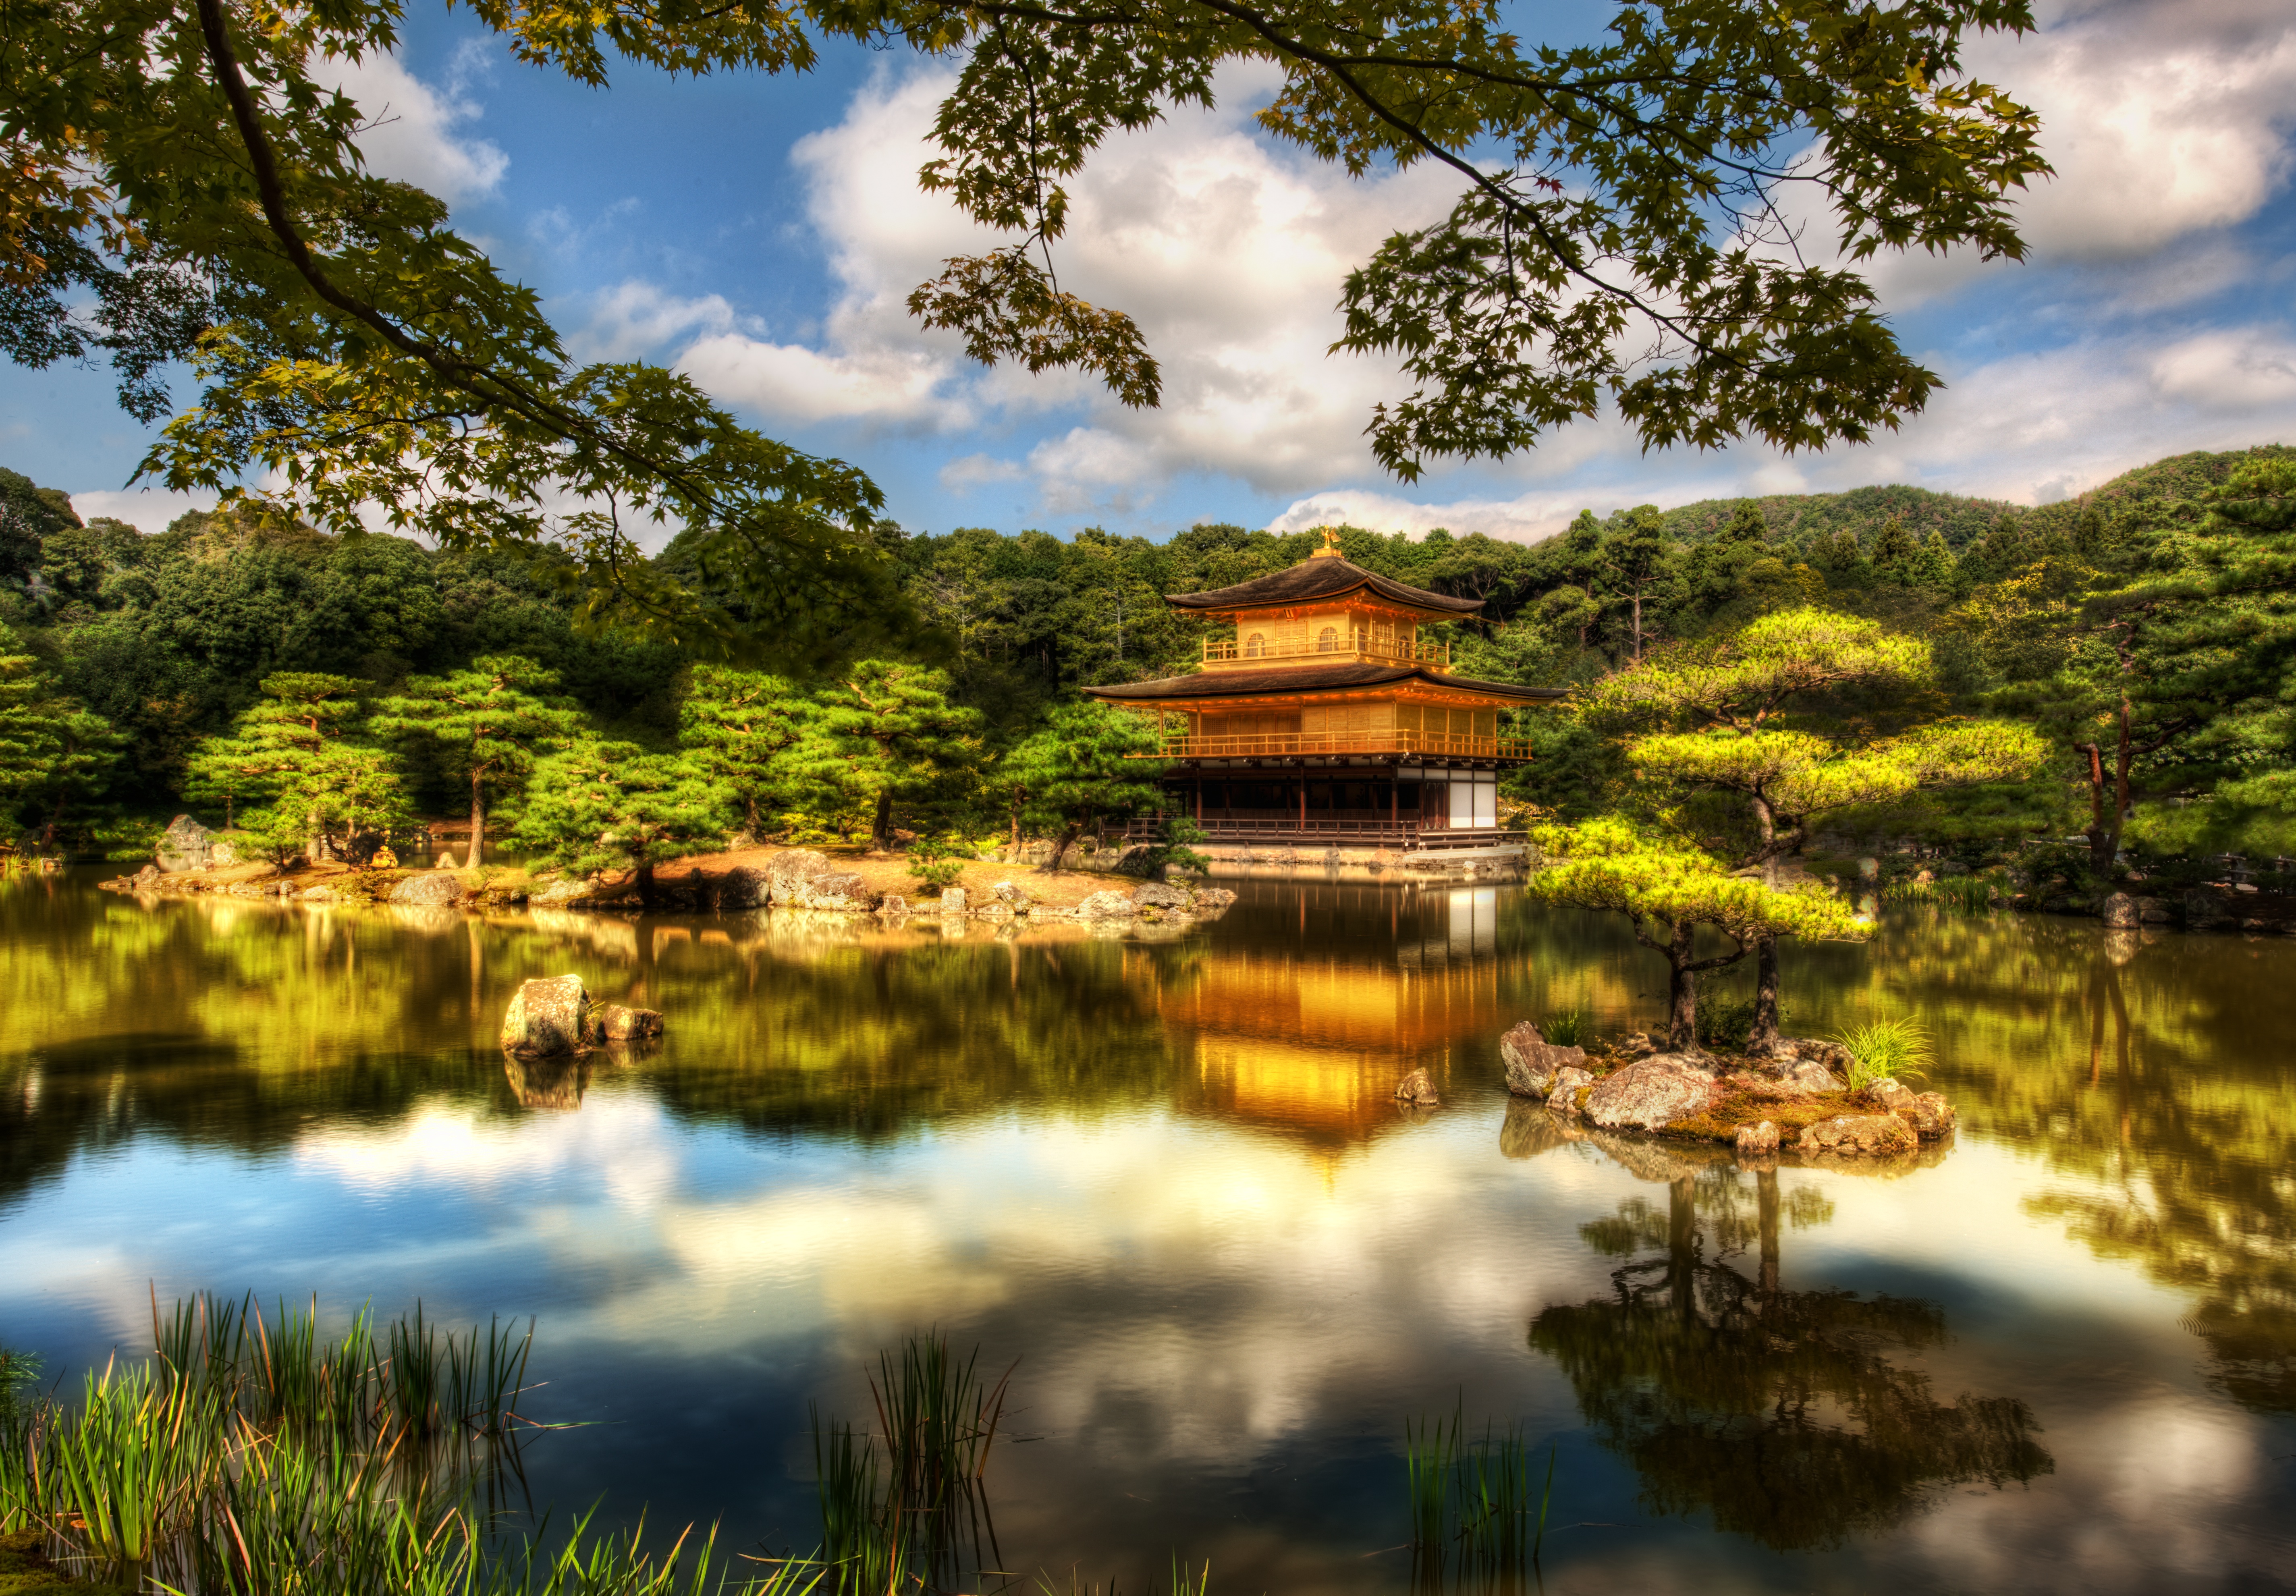 170163 descargar imagen religioso, kinkaku ji, hdr, japón, kioto, templos: fondos de pantalla y protectores de pantalla gratis